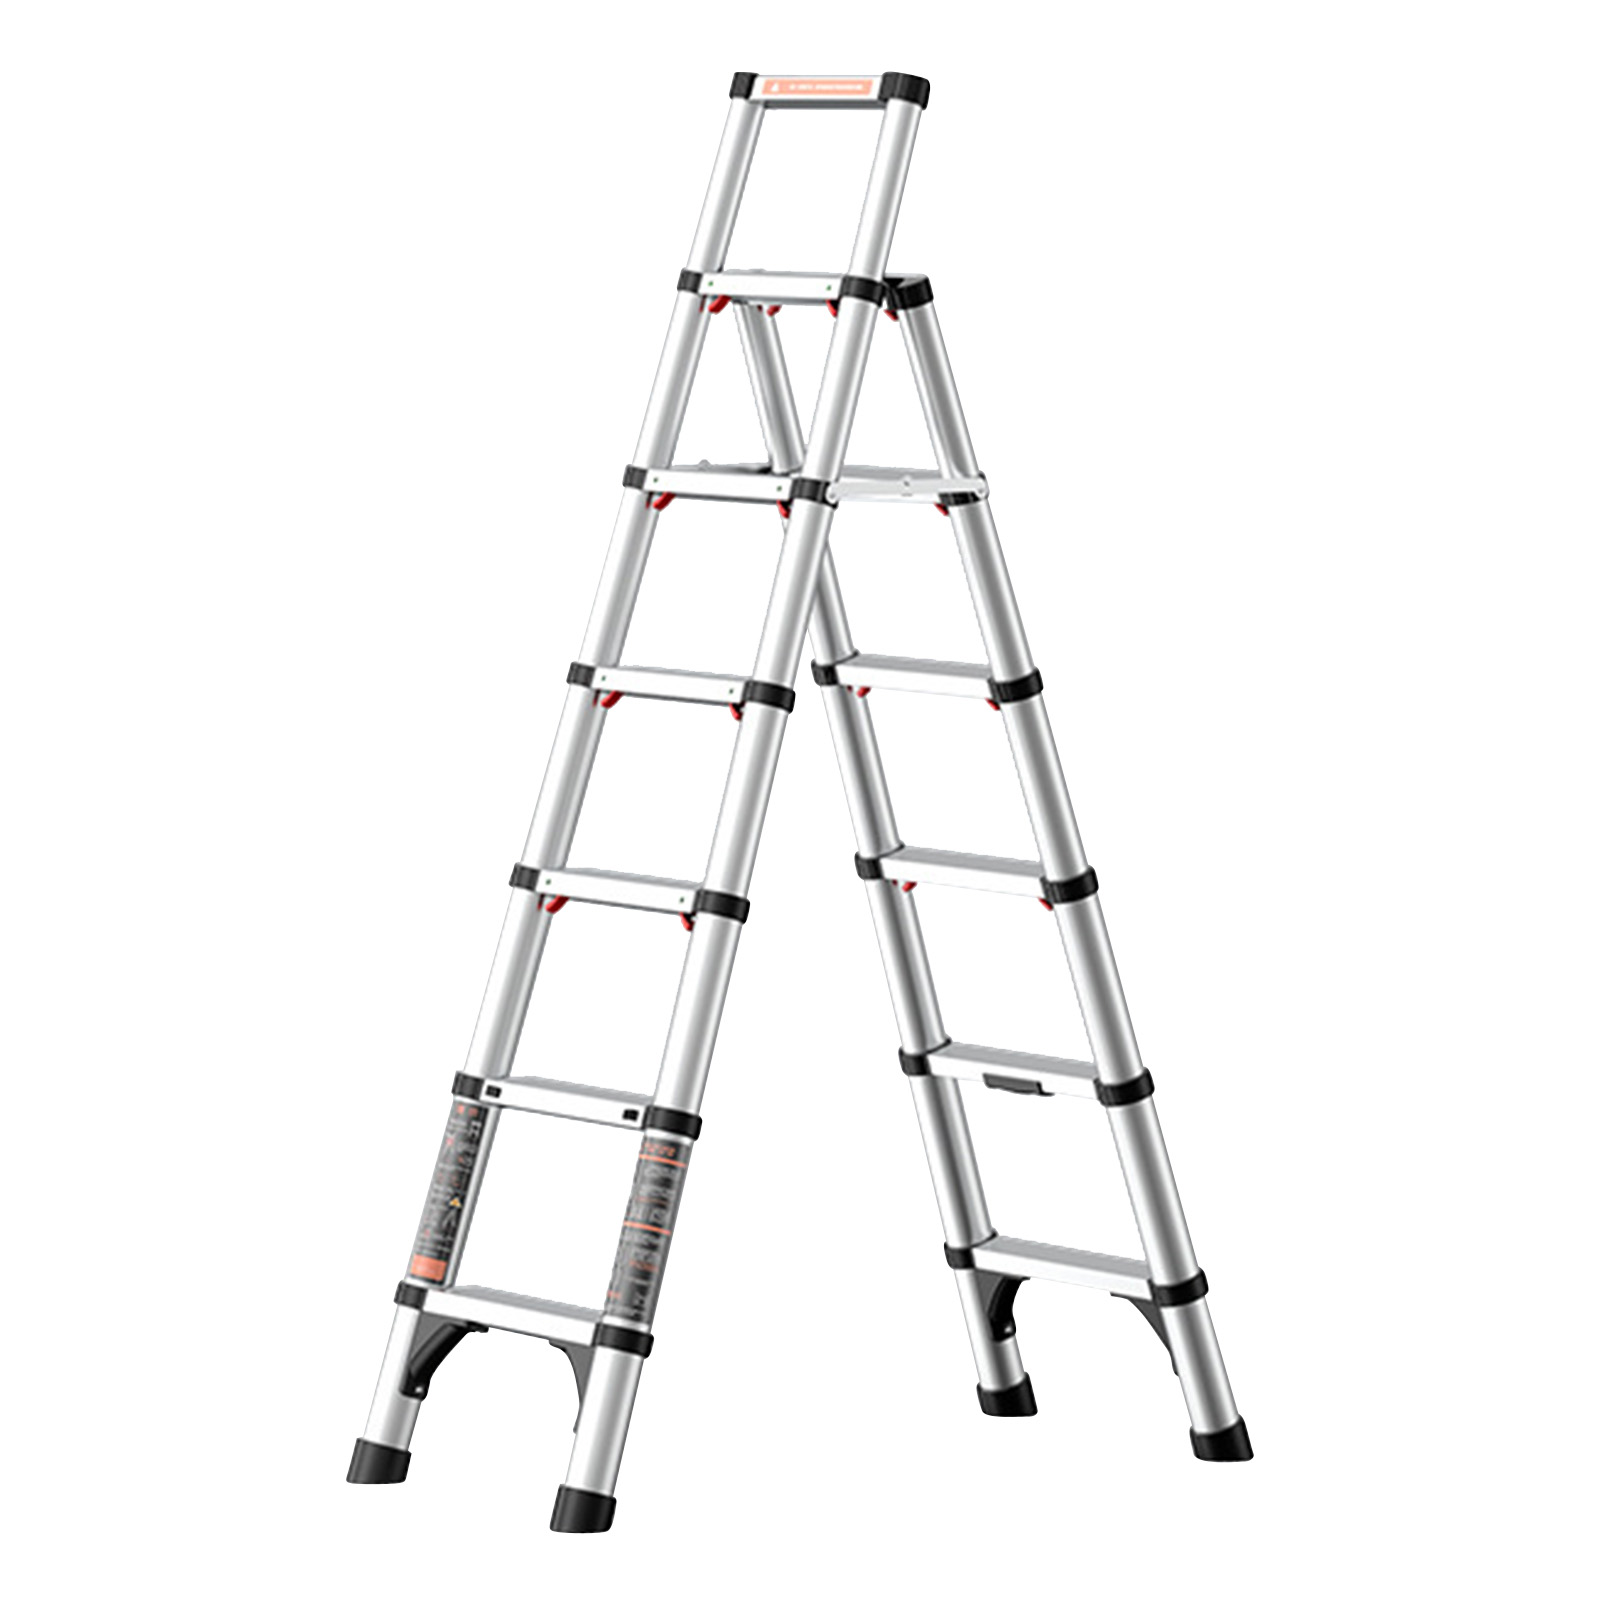 Silver six-step ladder